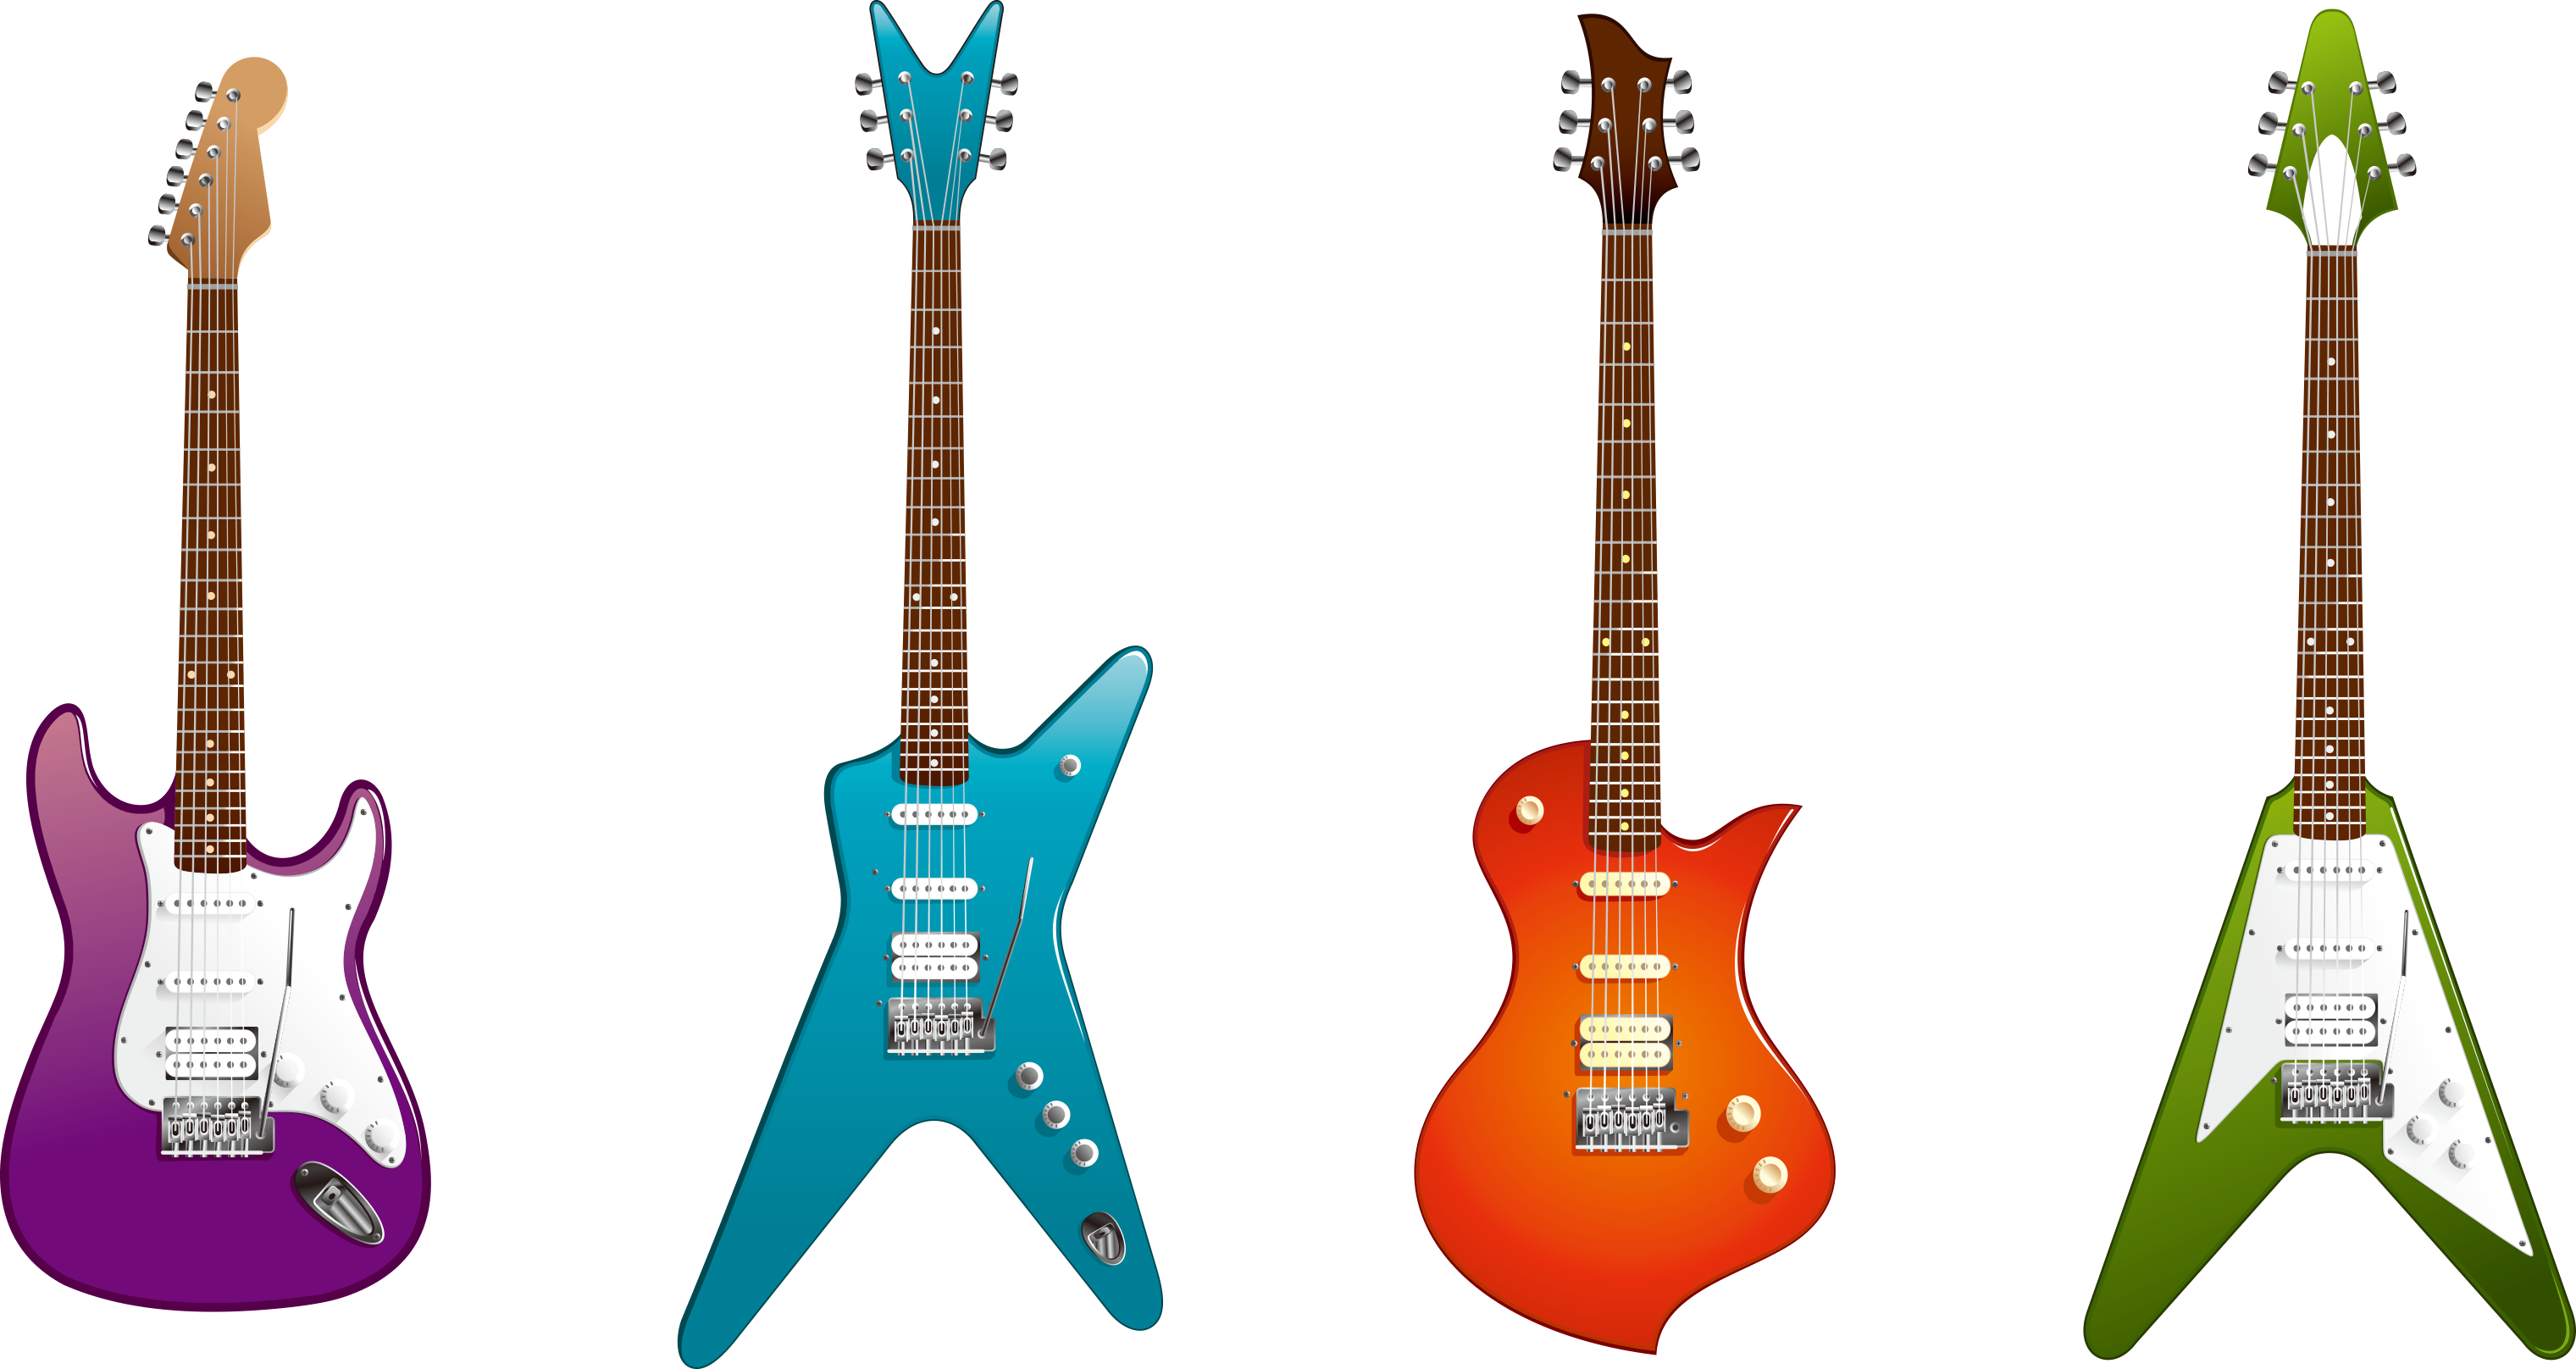 Four Different Electric Equipment Guitar Instrument Guitars Clipart